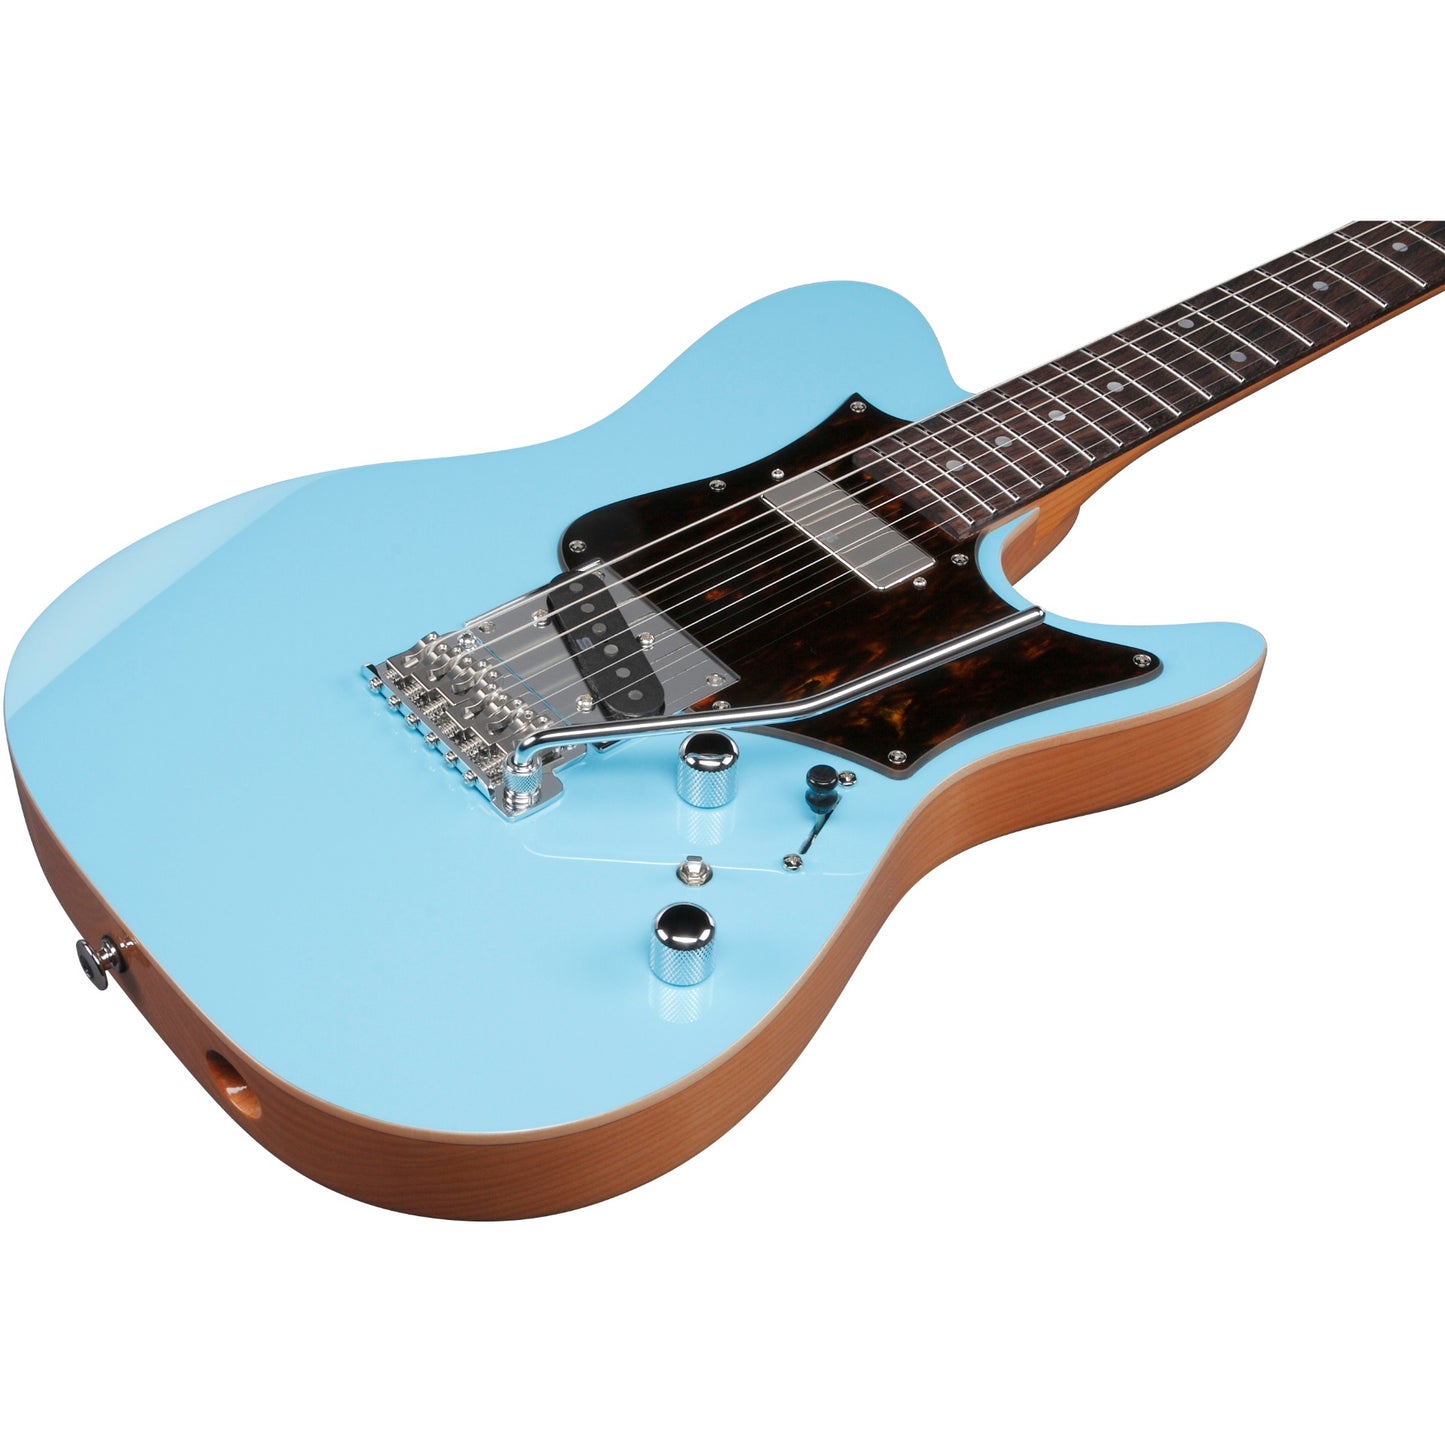 Ibanez Tom Quayle Signature Electric Guitar w/ Case - Celeste Blue